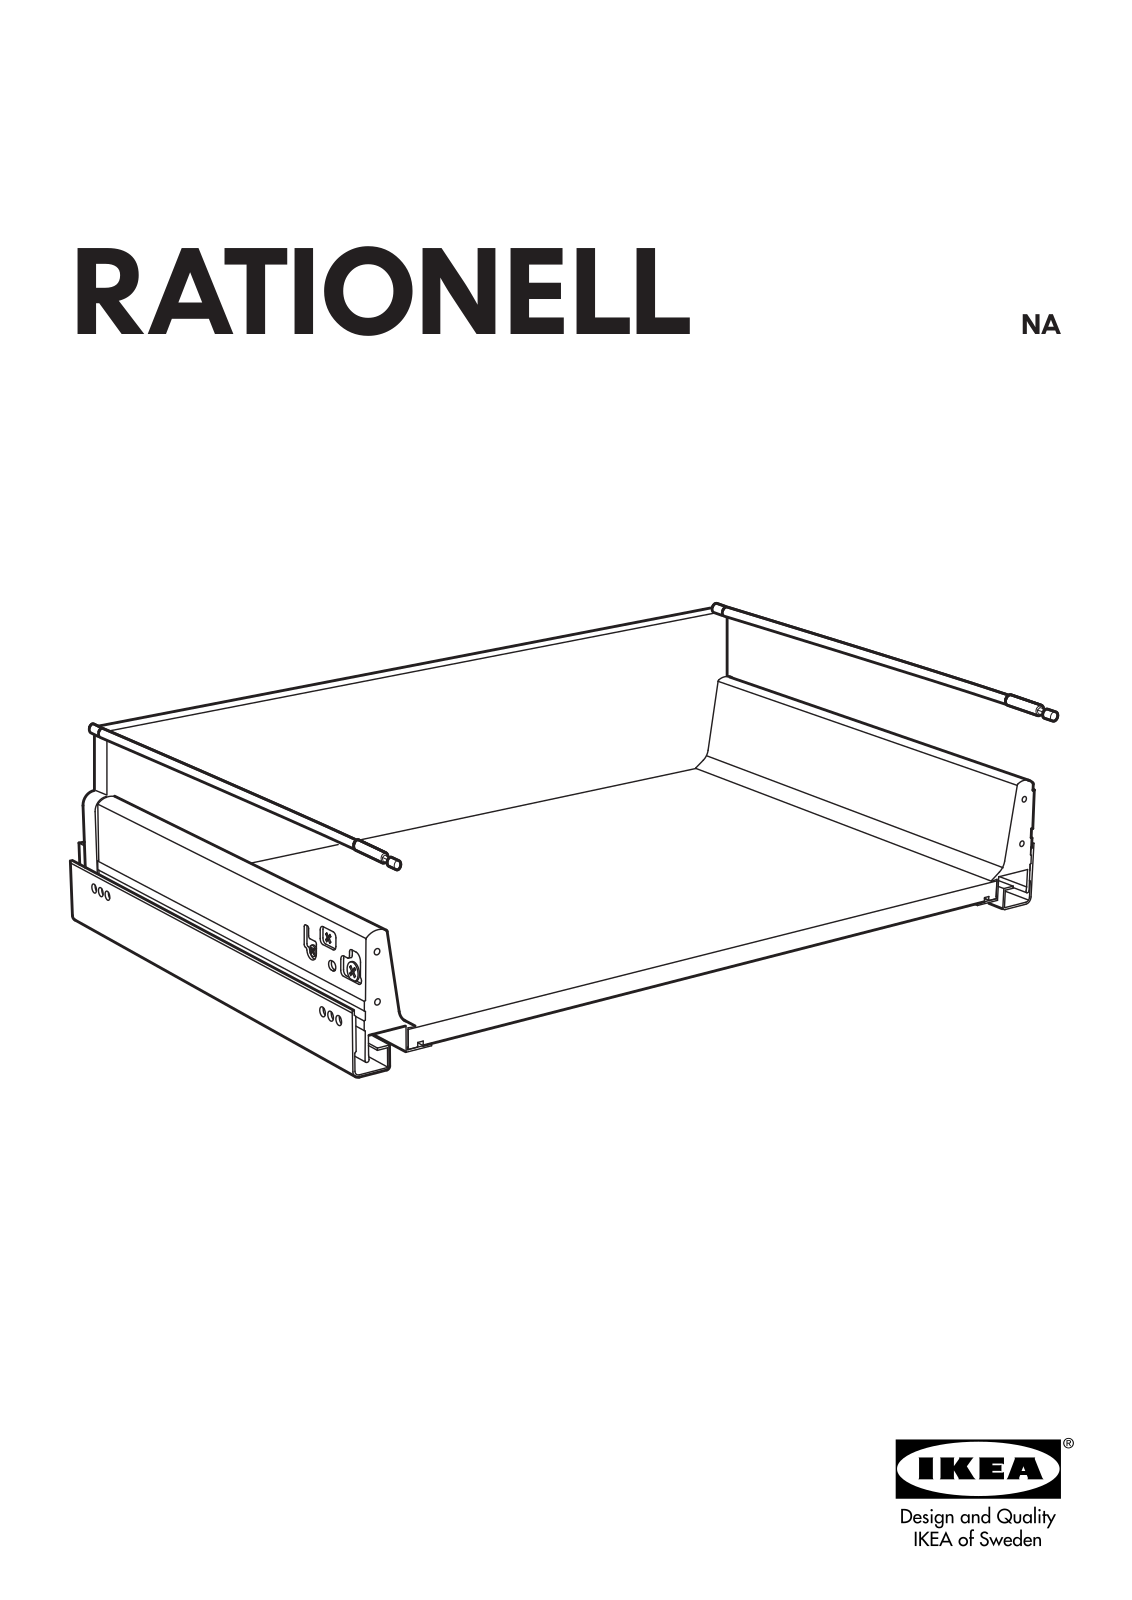 IKEA RATIONELL DEEP FULL-EXTENDING DRAWER DAMPER 18